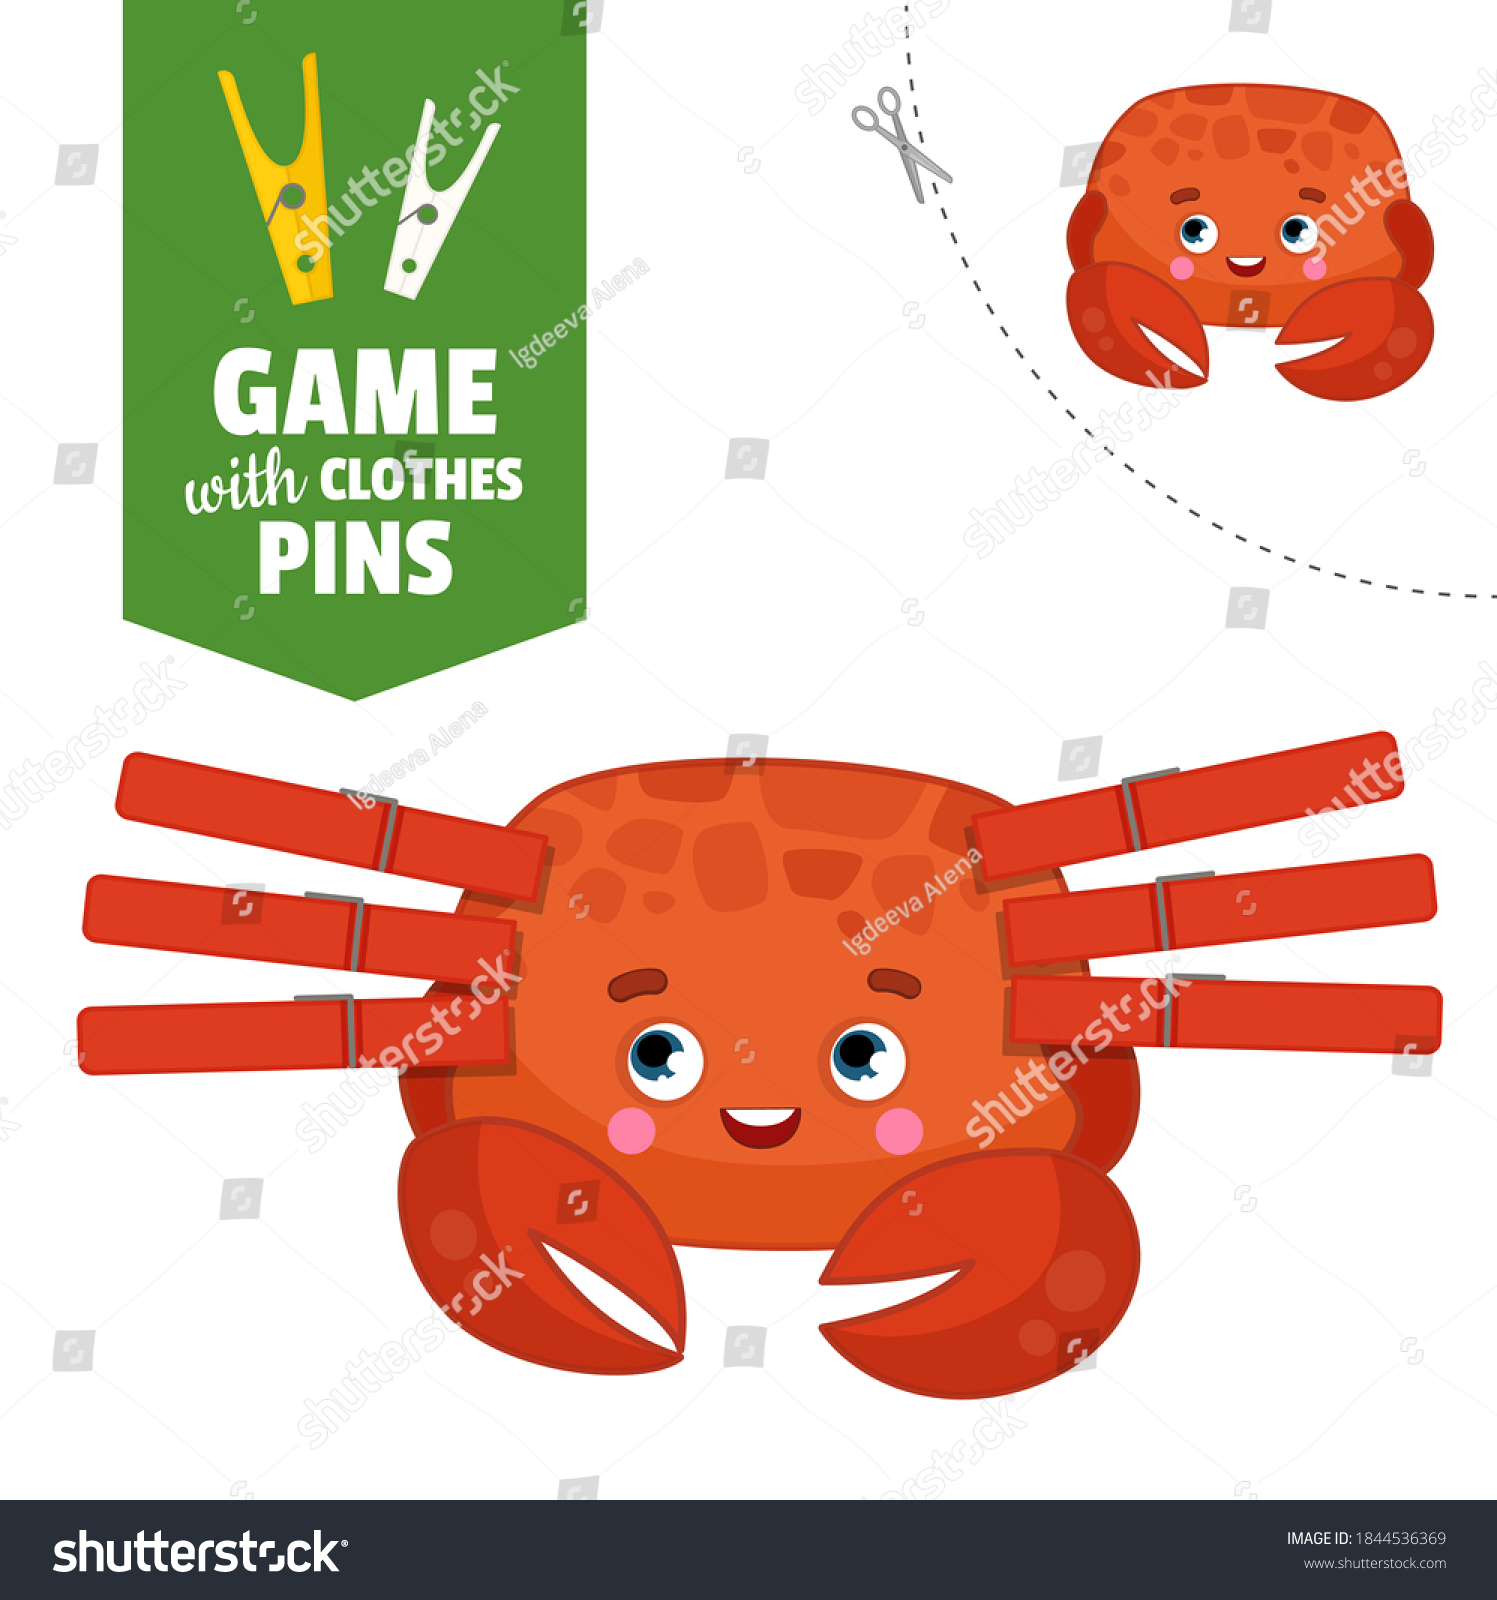 printable-board-game-templates-for-kids-activities-free-printable